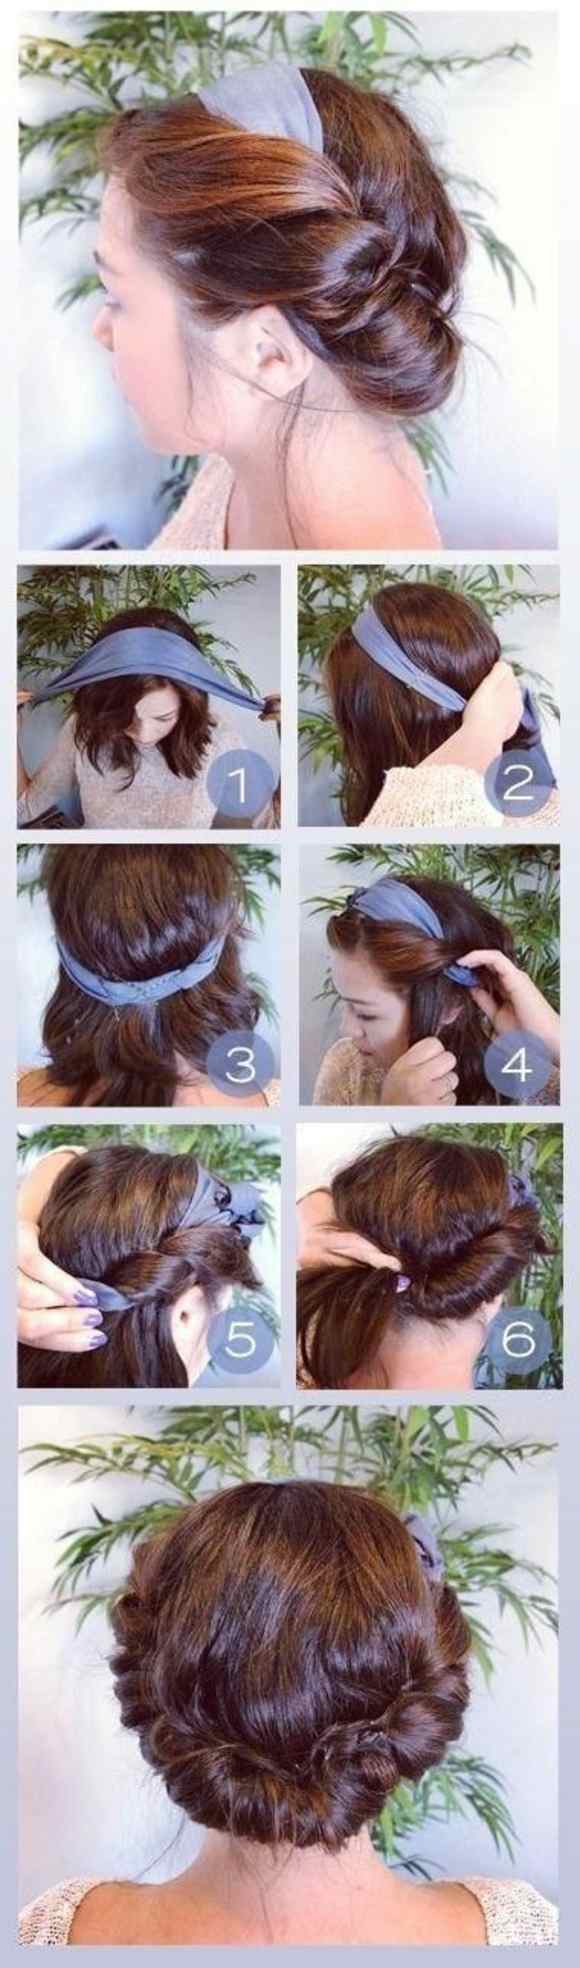 Idea hairstyle interesting woman tutorial